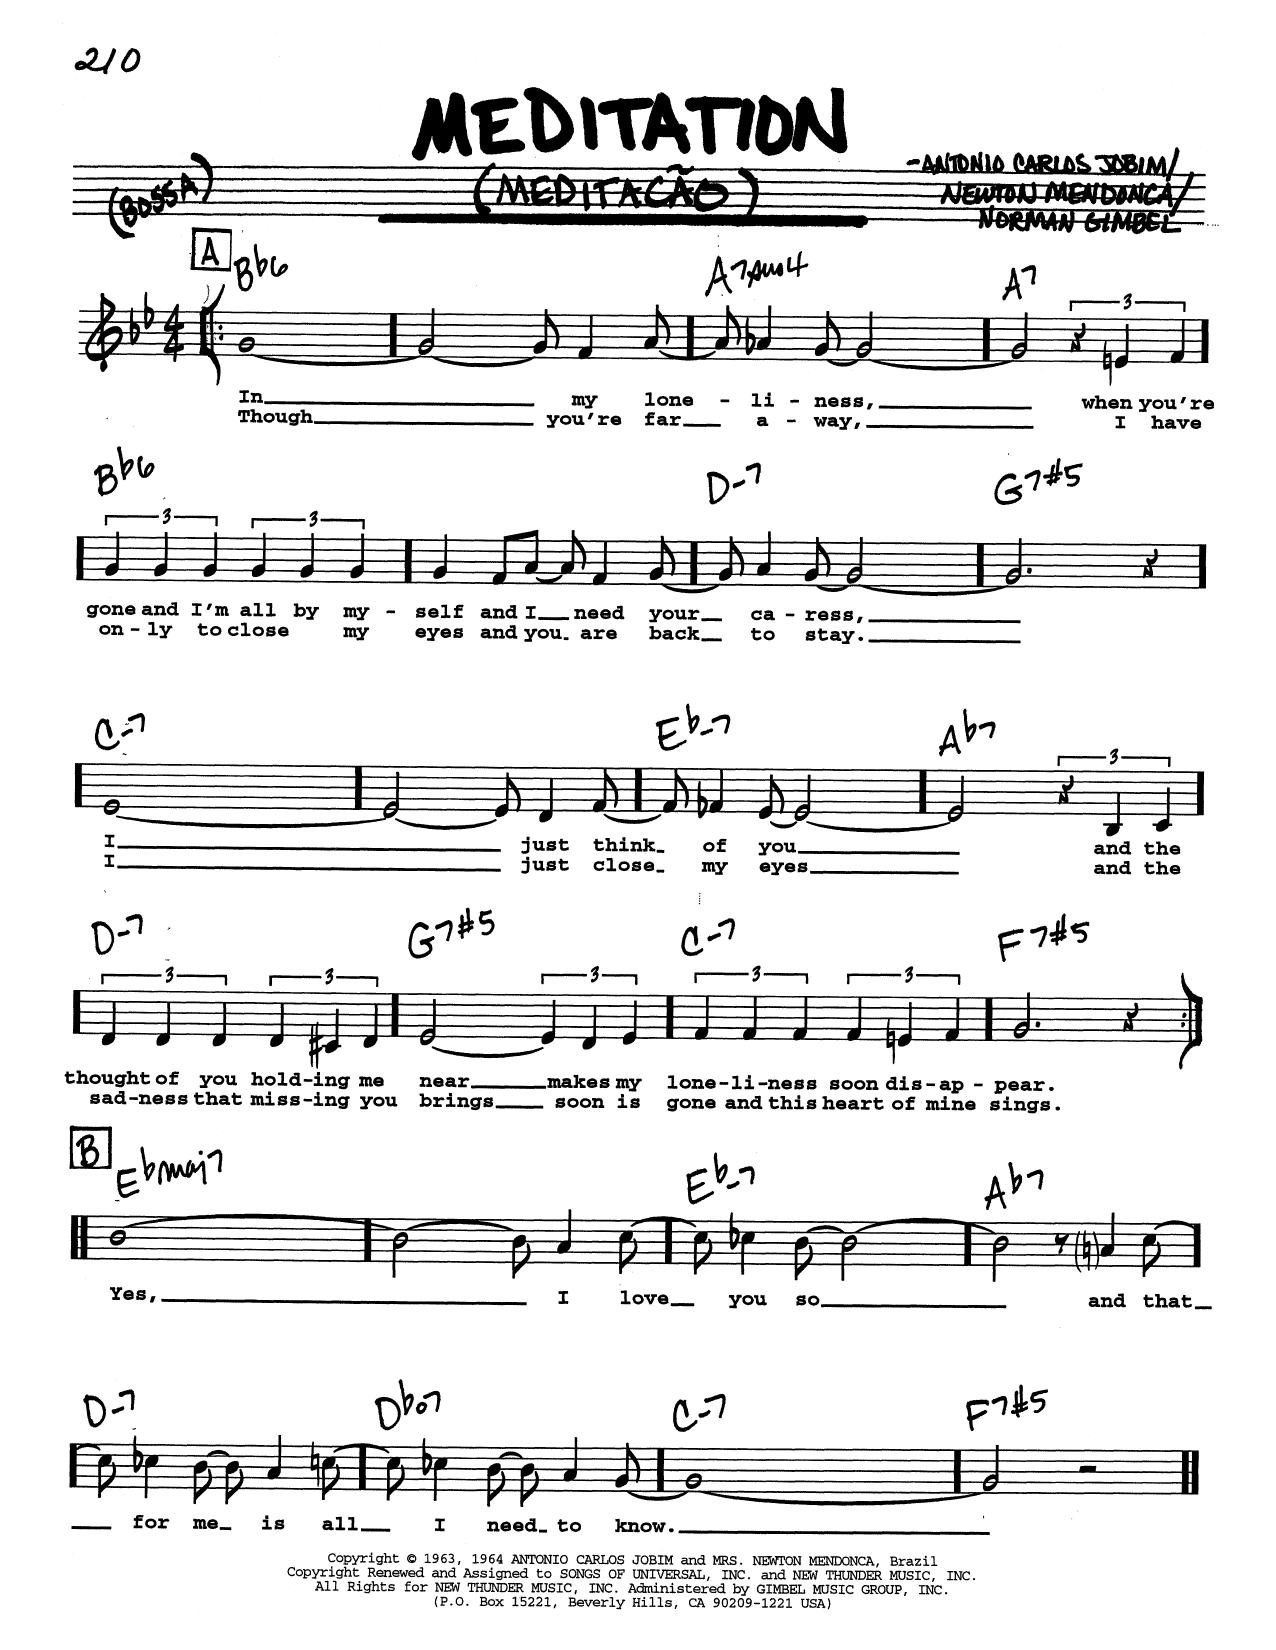 Antonio Carlos Jobim Meditation (Meditacao) (Low Voice) Sheet Music Notes & Chords for Real Book – Melody, Lyrics & Chords - Download or Print PDF